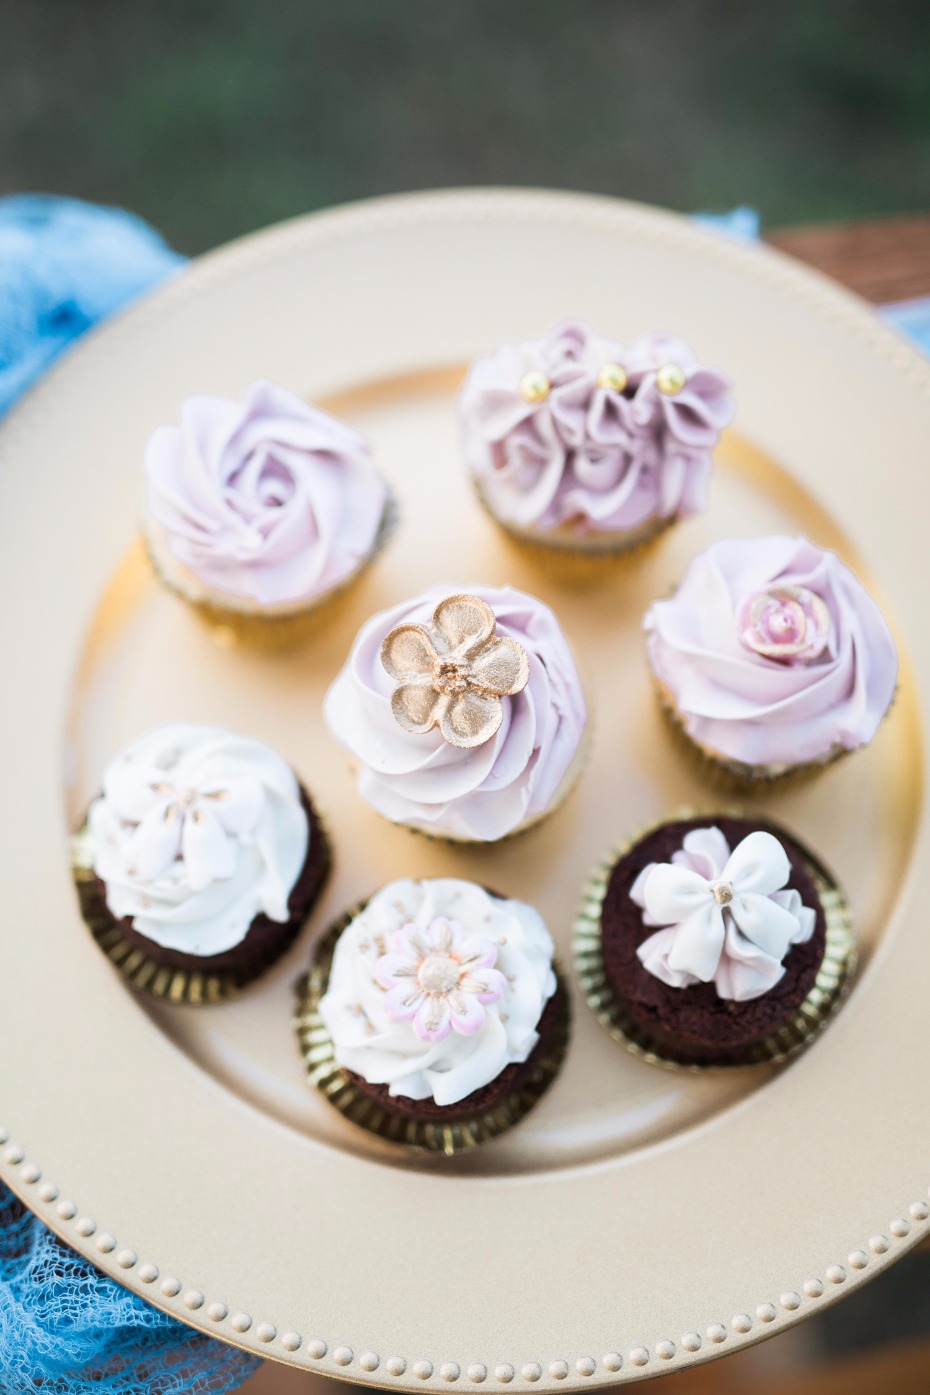 Tasty wedding cupcakes